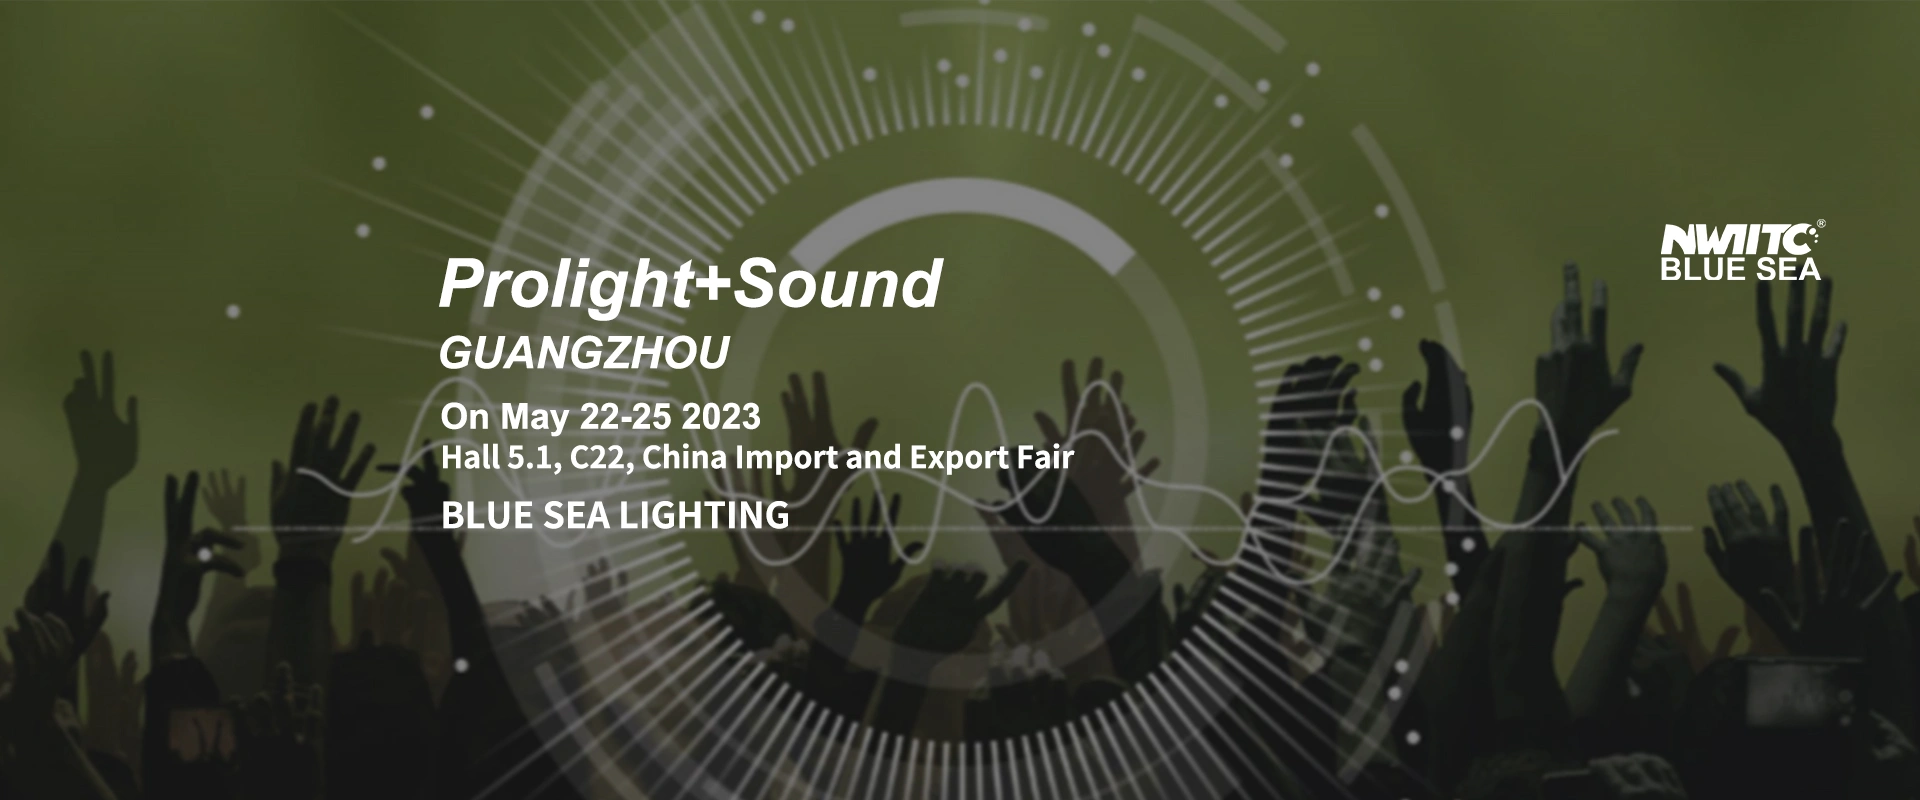 Sneak Peek into the 2023 Guangzhou Prolight+Sound Exhibition